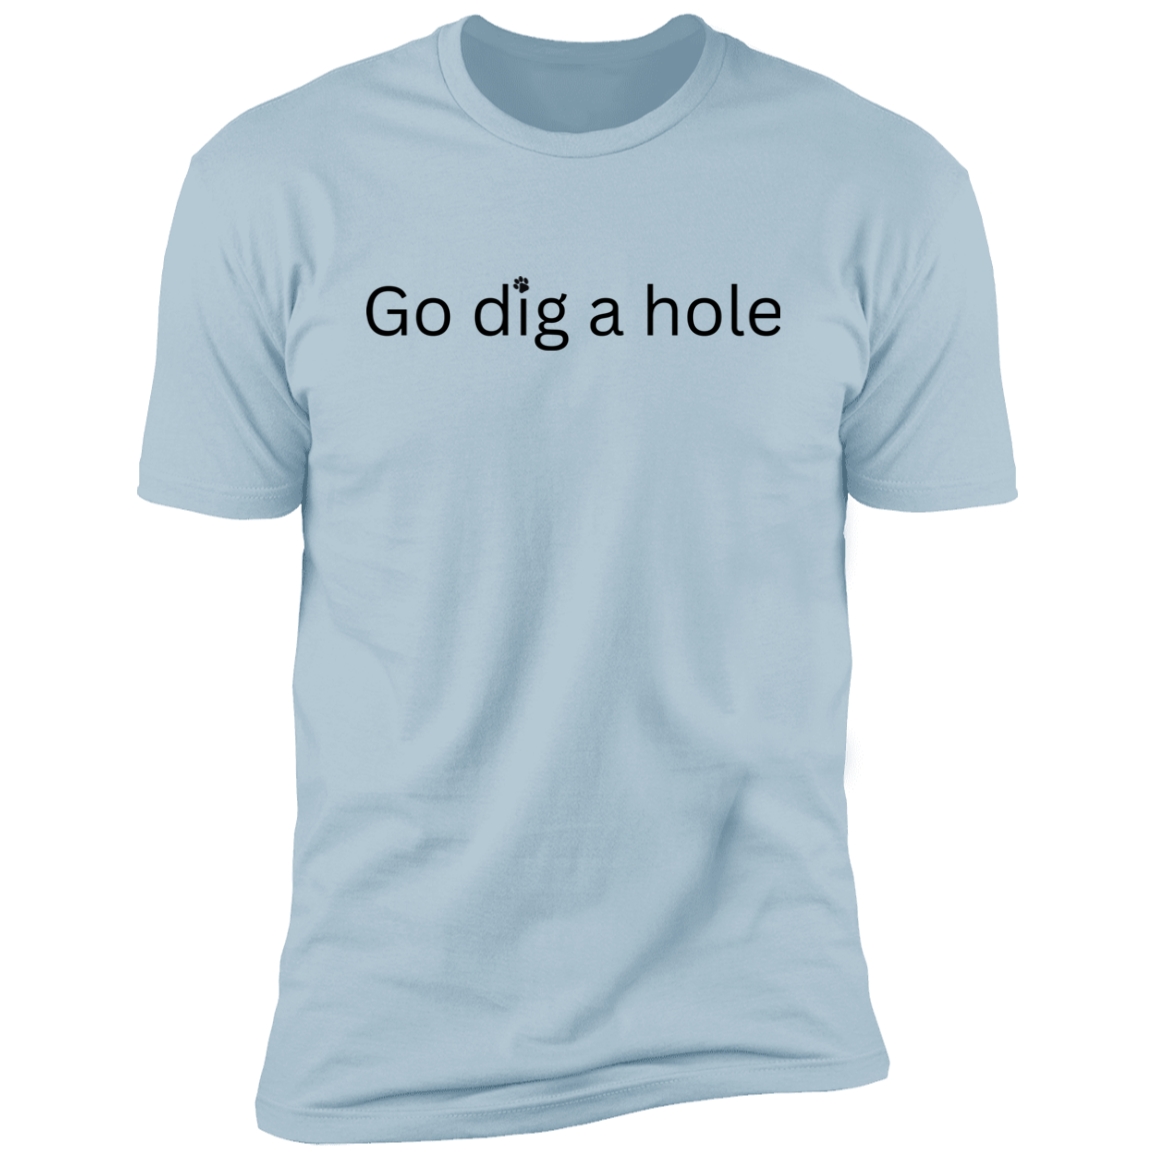 Go Dig a Hole Dog T-Shirt, Dog shirt for humans, funny dog shirt, funny t-shirt, in light blue